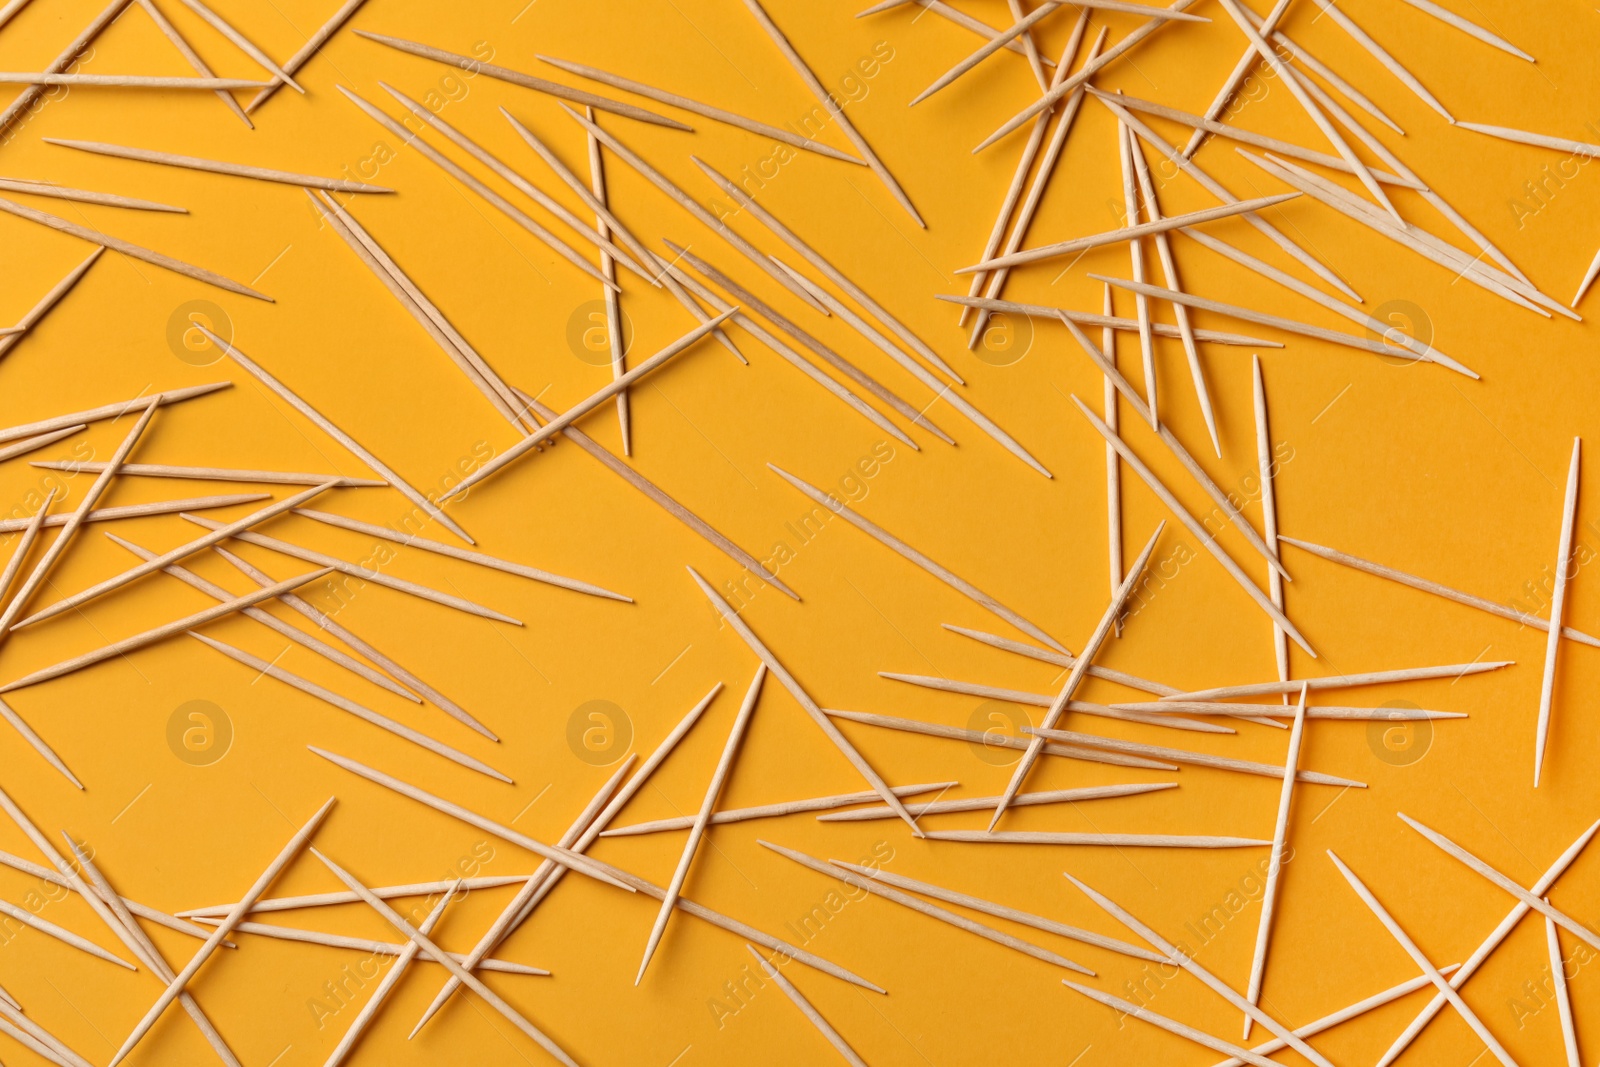 Photo of Wooden toothpicks on orange background, flat lay